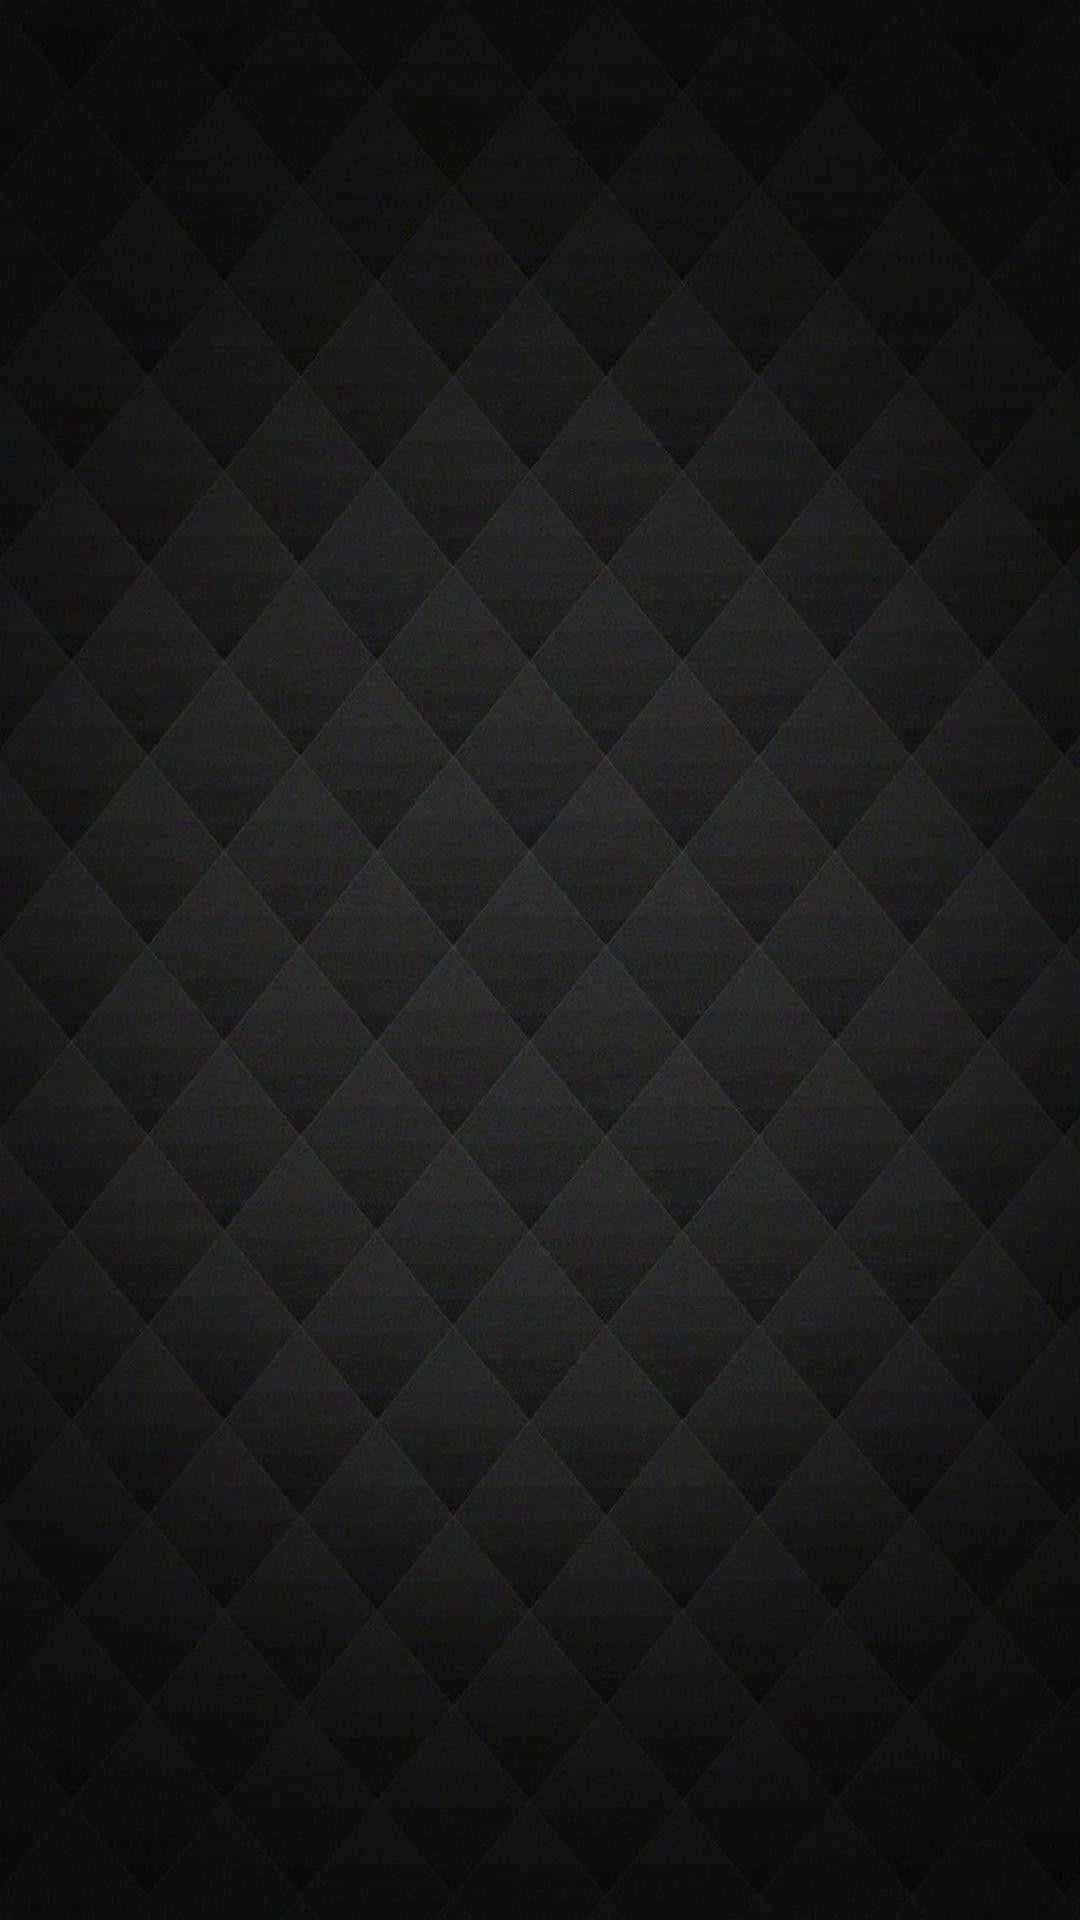 Den ultimative luksus - Carbon Fiber Iphone Wallpaper